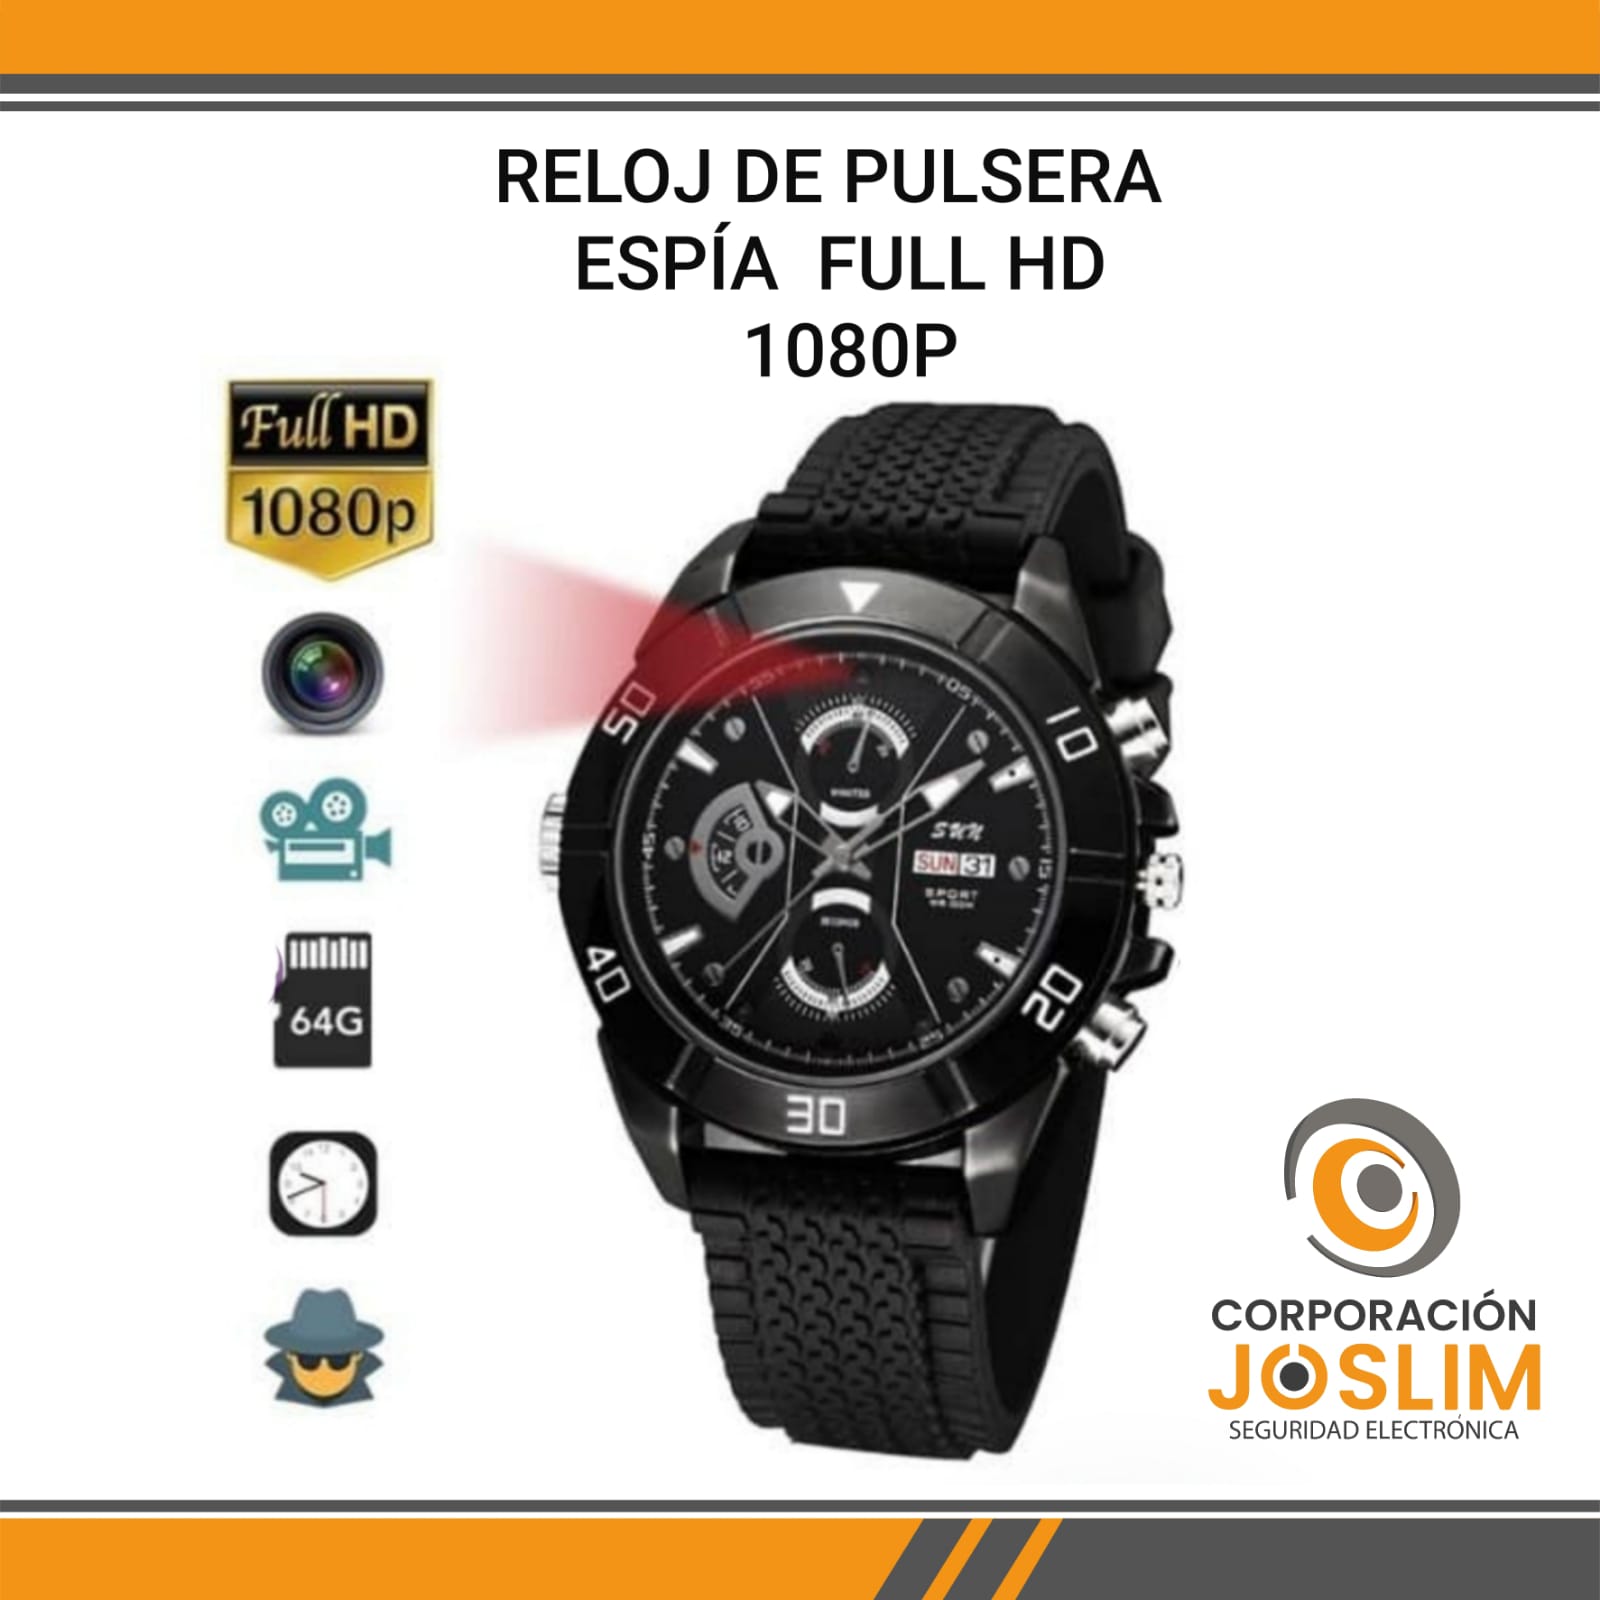 LIMBO PERU - RELOJ ESPÍA FULL HD 2020 Audio y Video